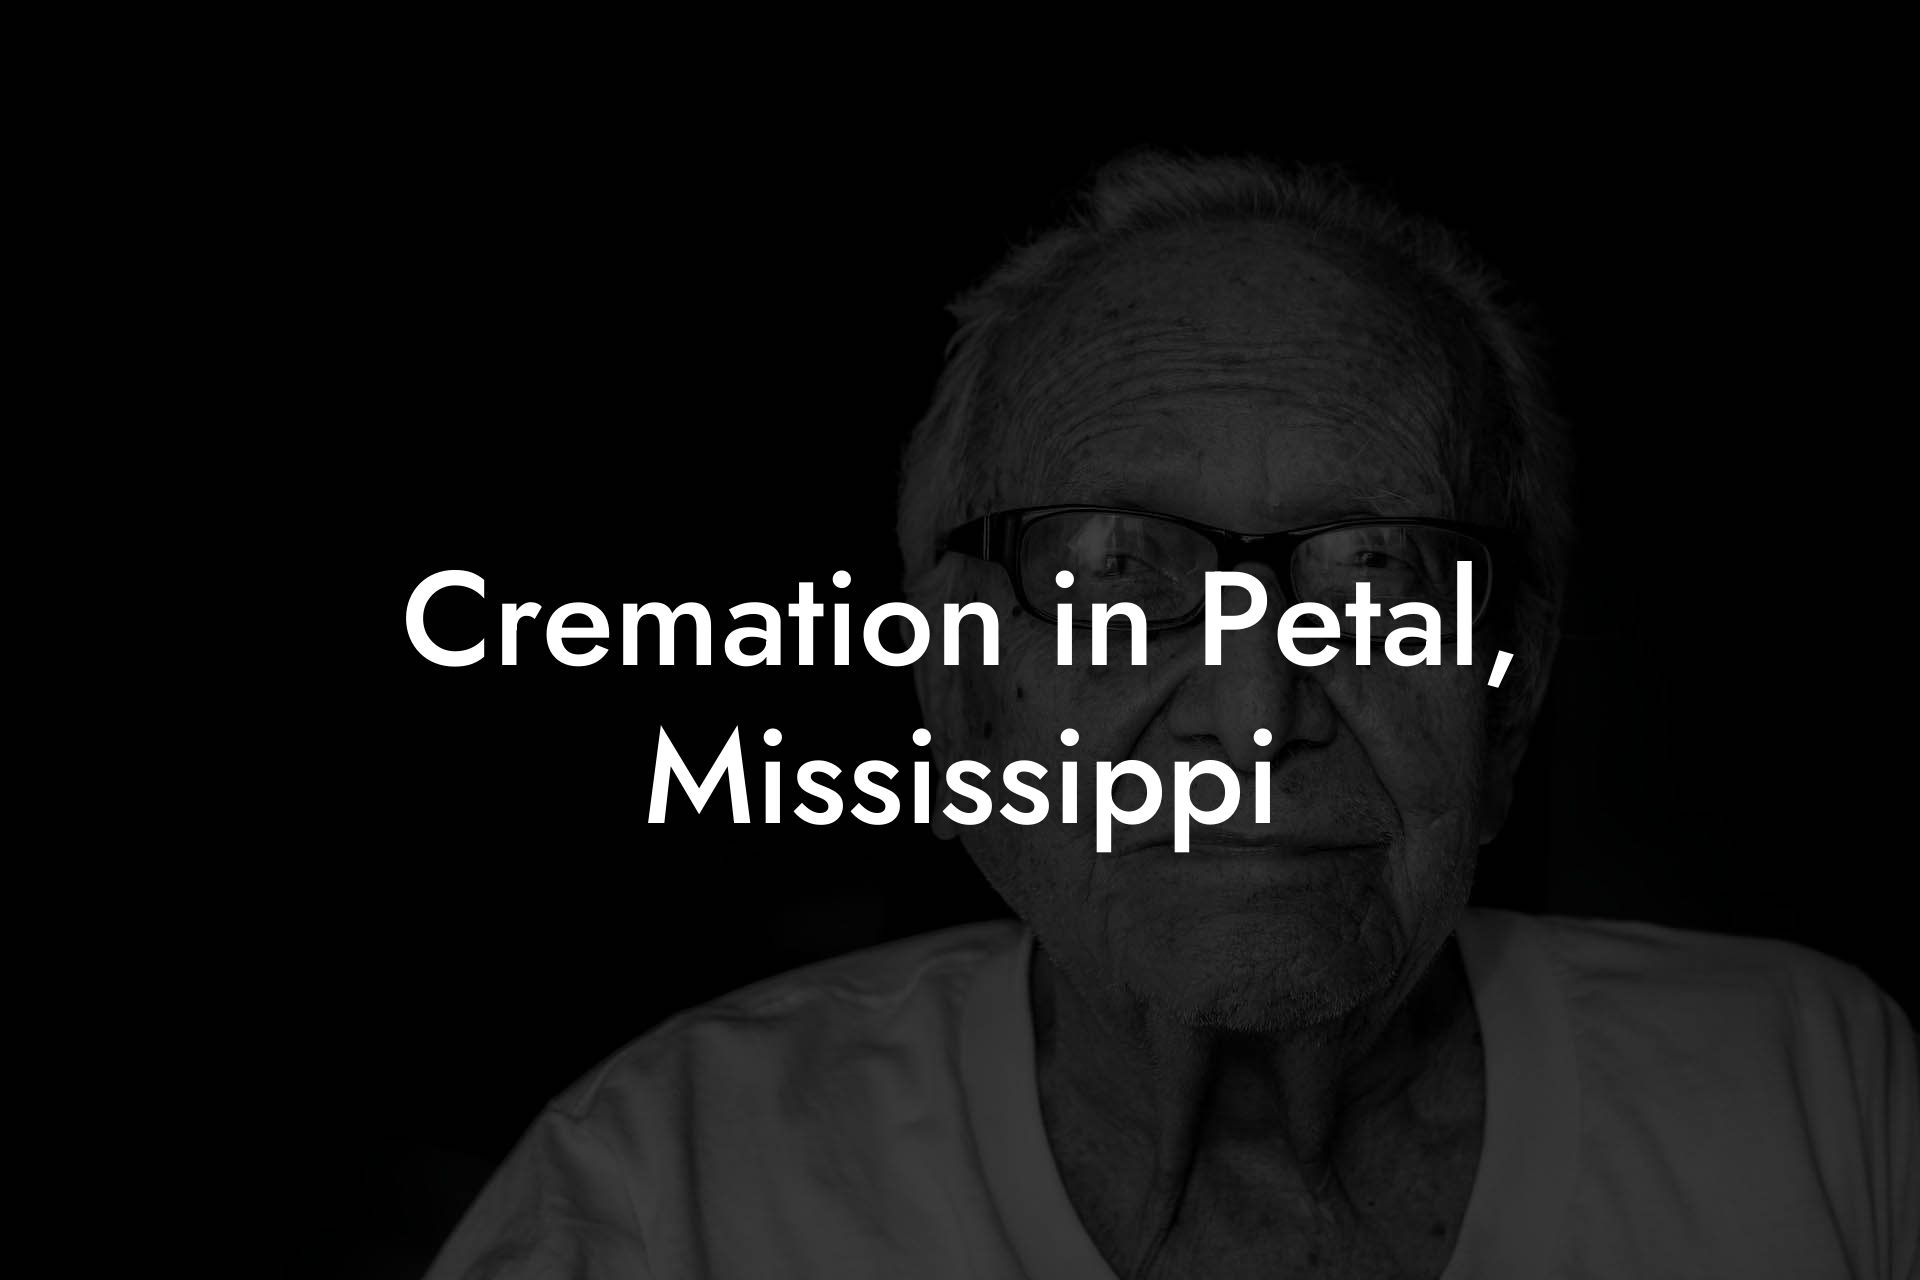 Cremation in Petal, Mississippi